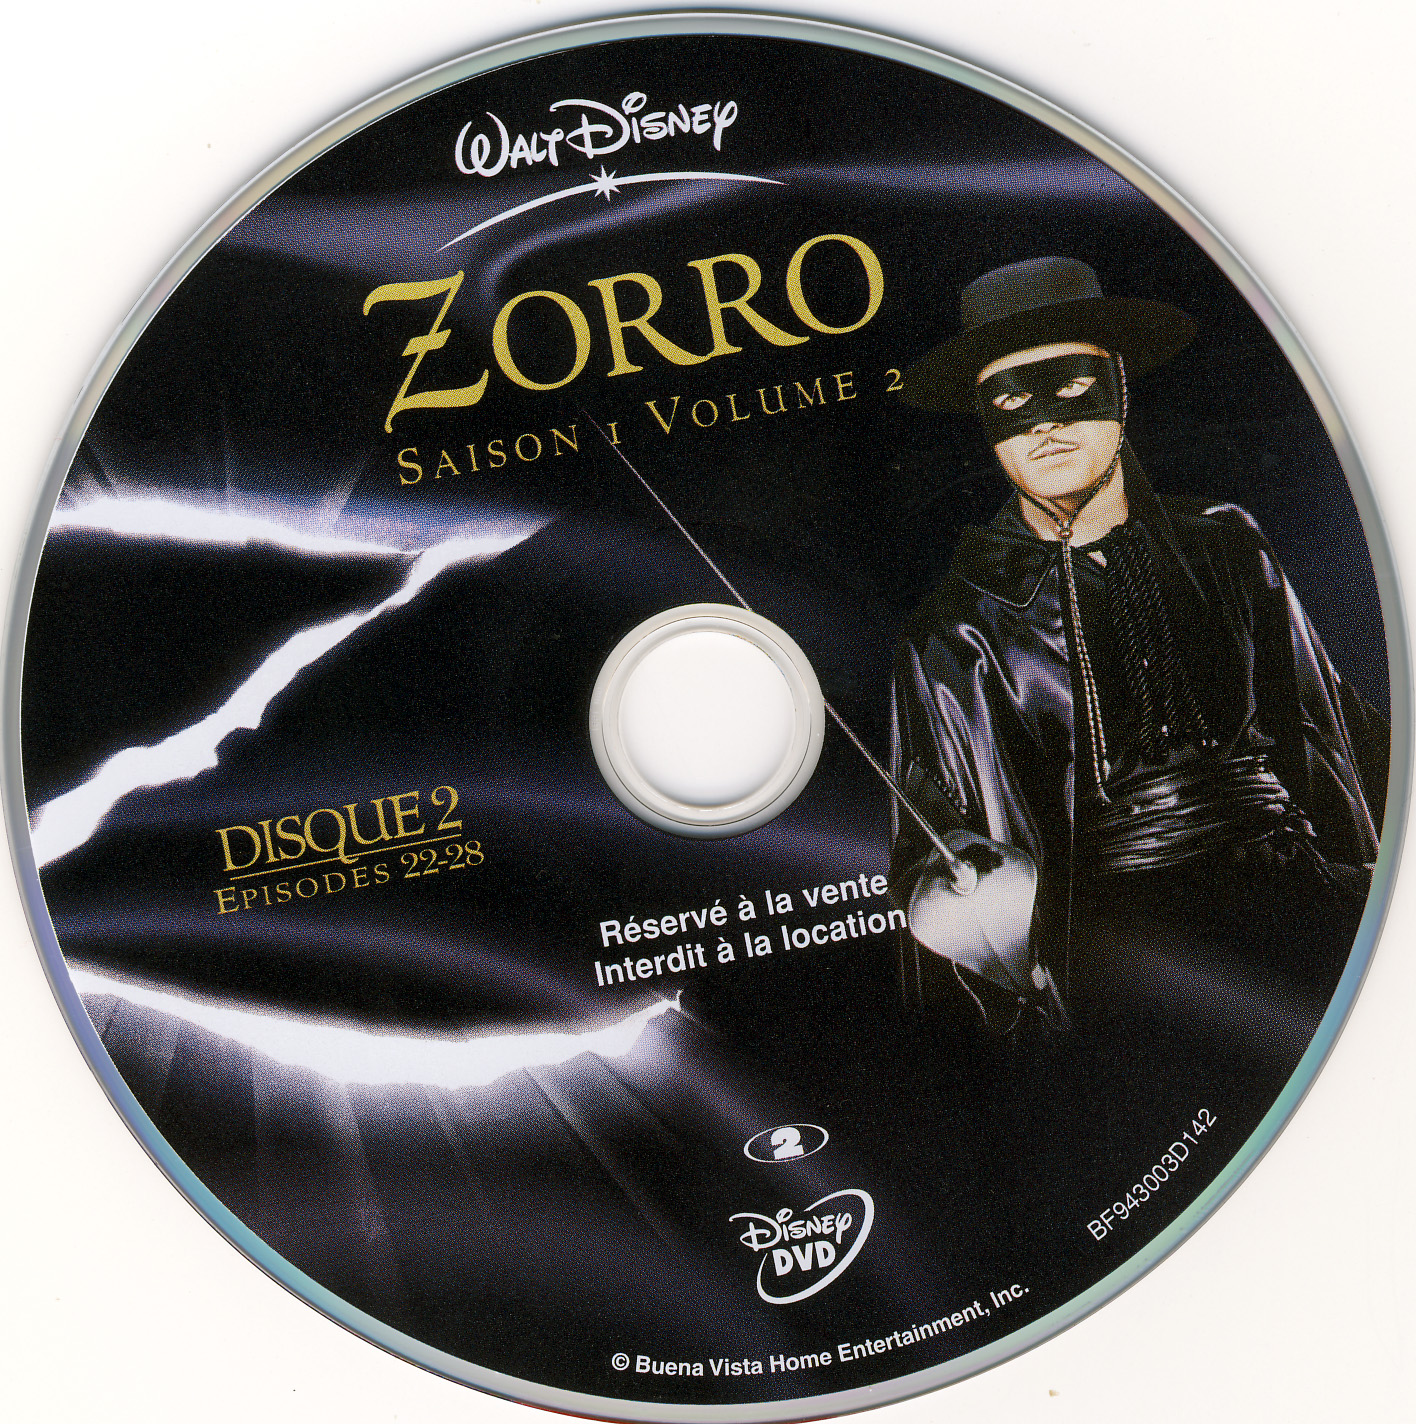 Zorro Saison 1 vol 2 DISC 2